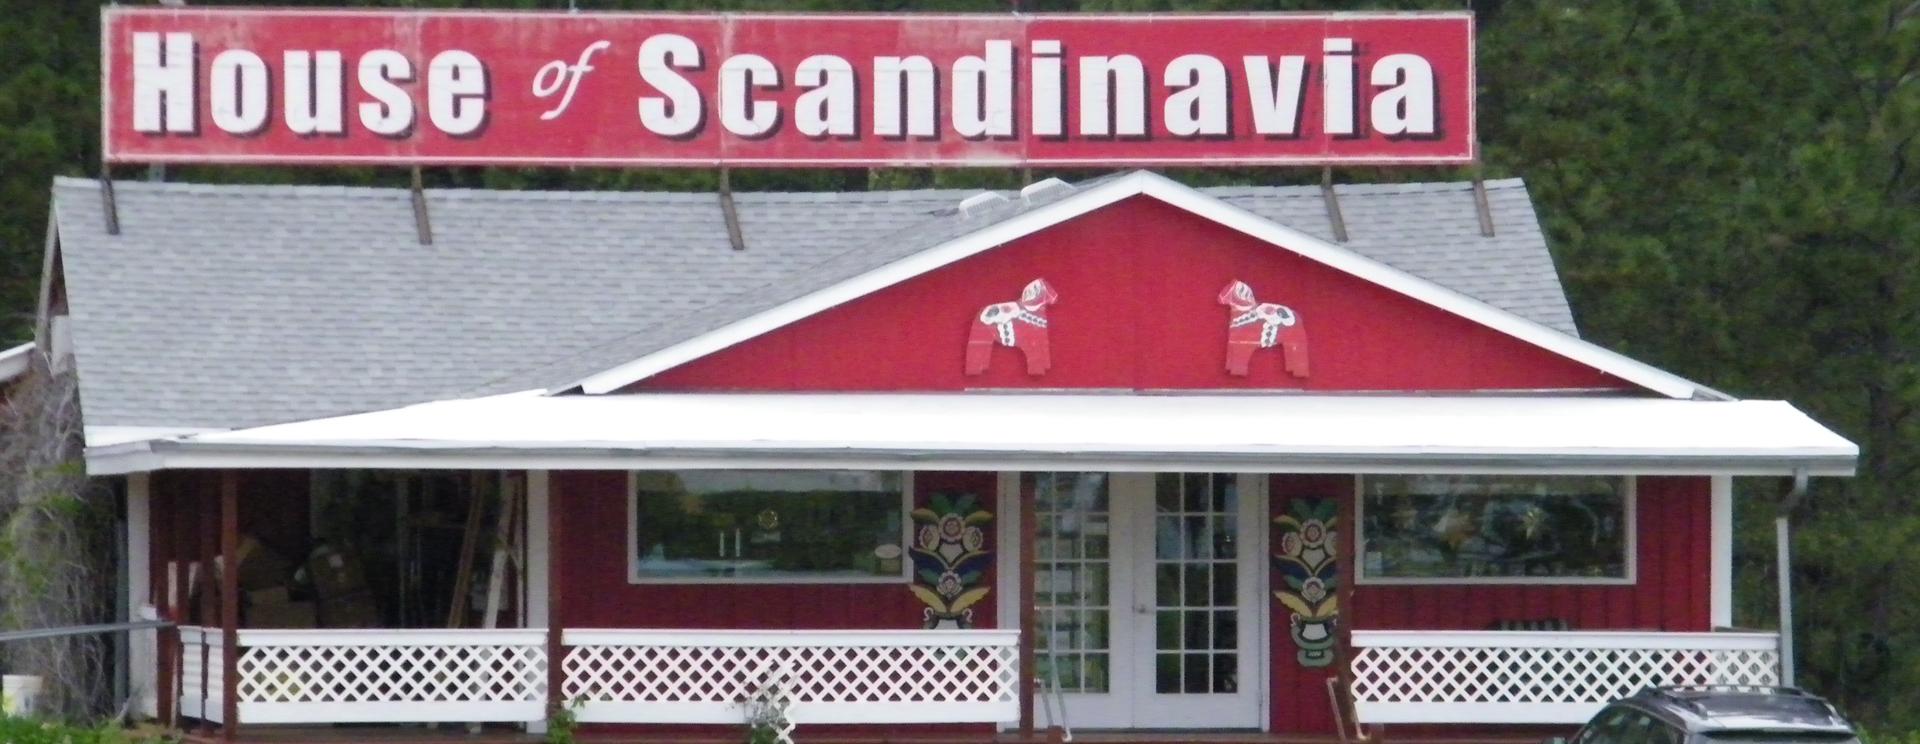 House of Scandinavia